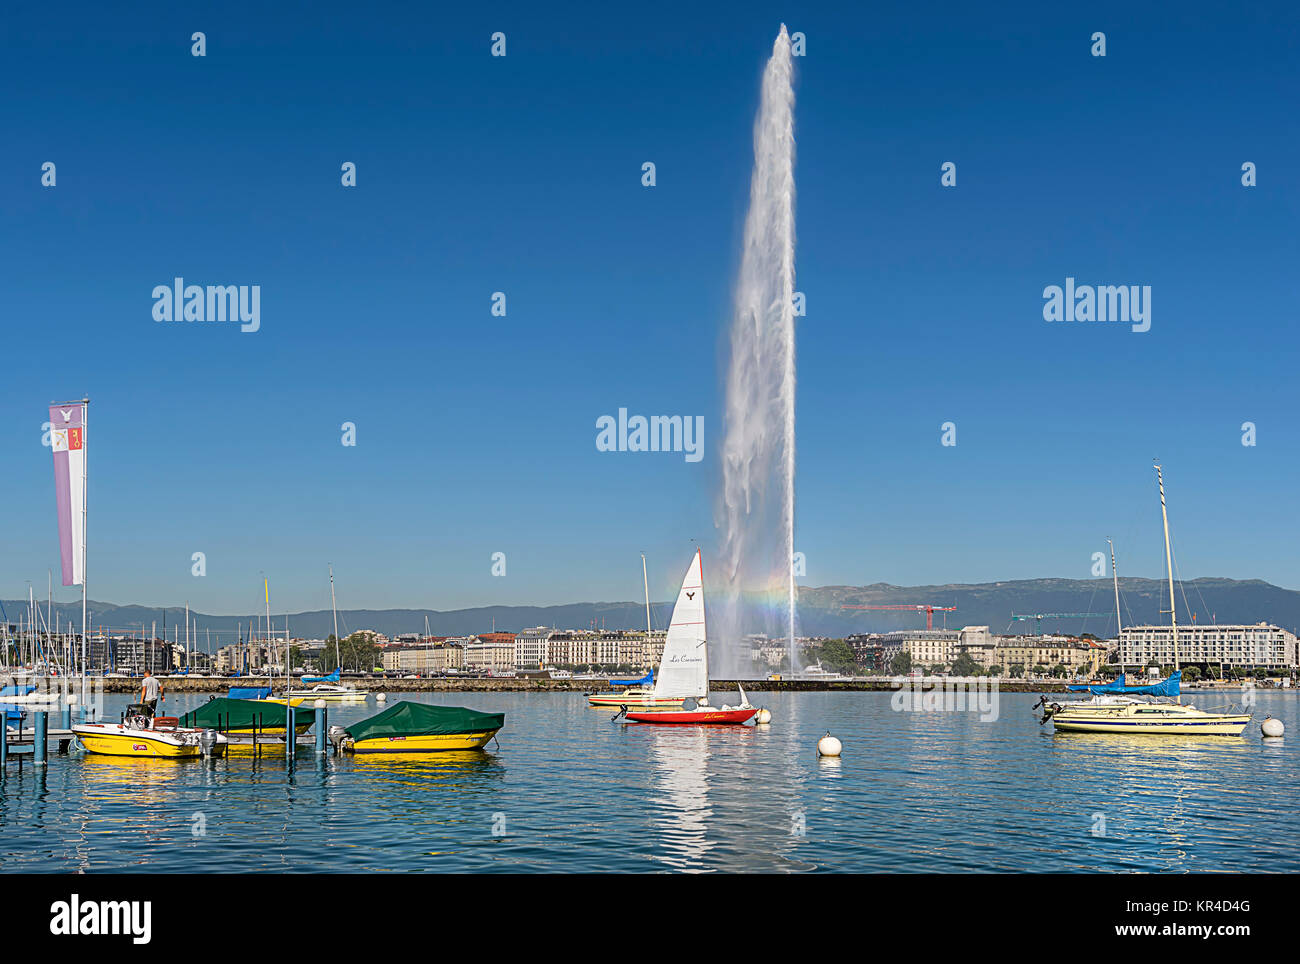 the fountain in the lake a landmark of the city of geneva Stock Photo